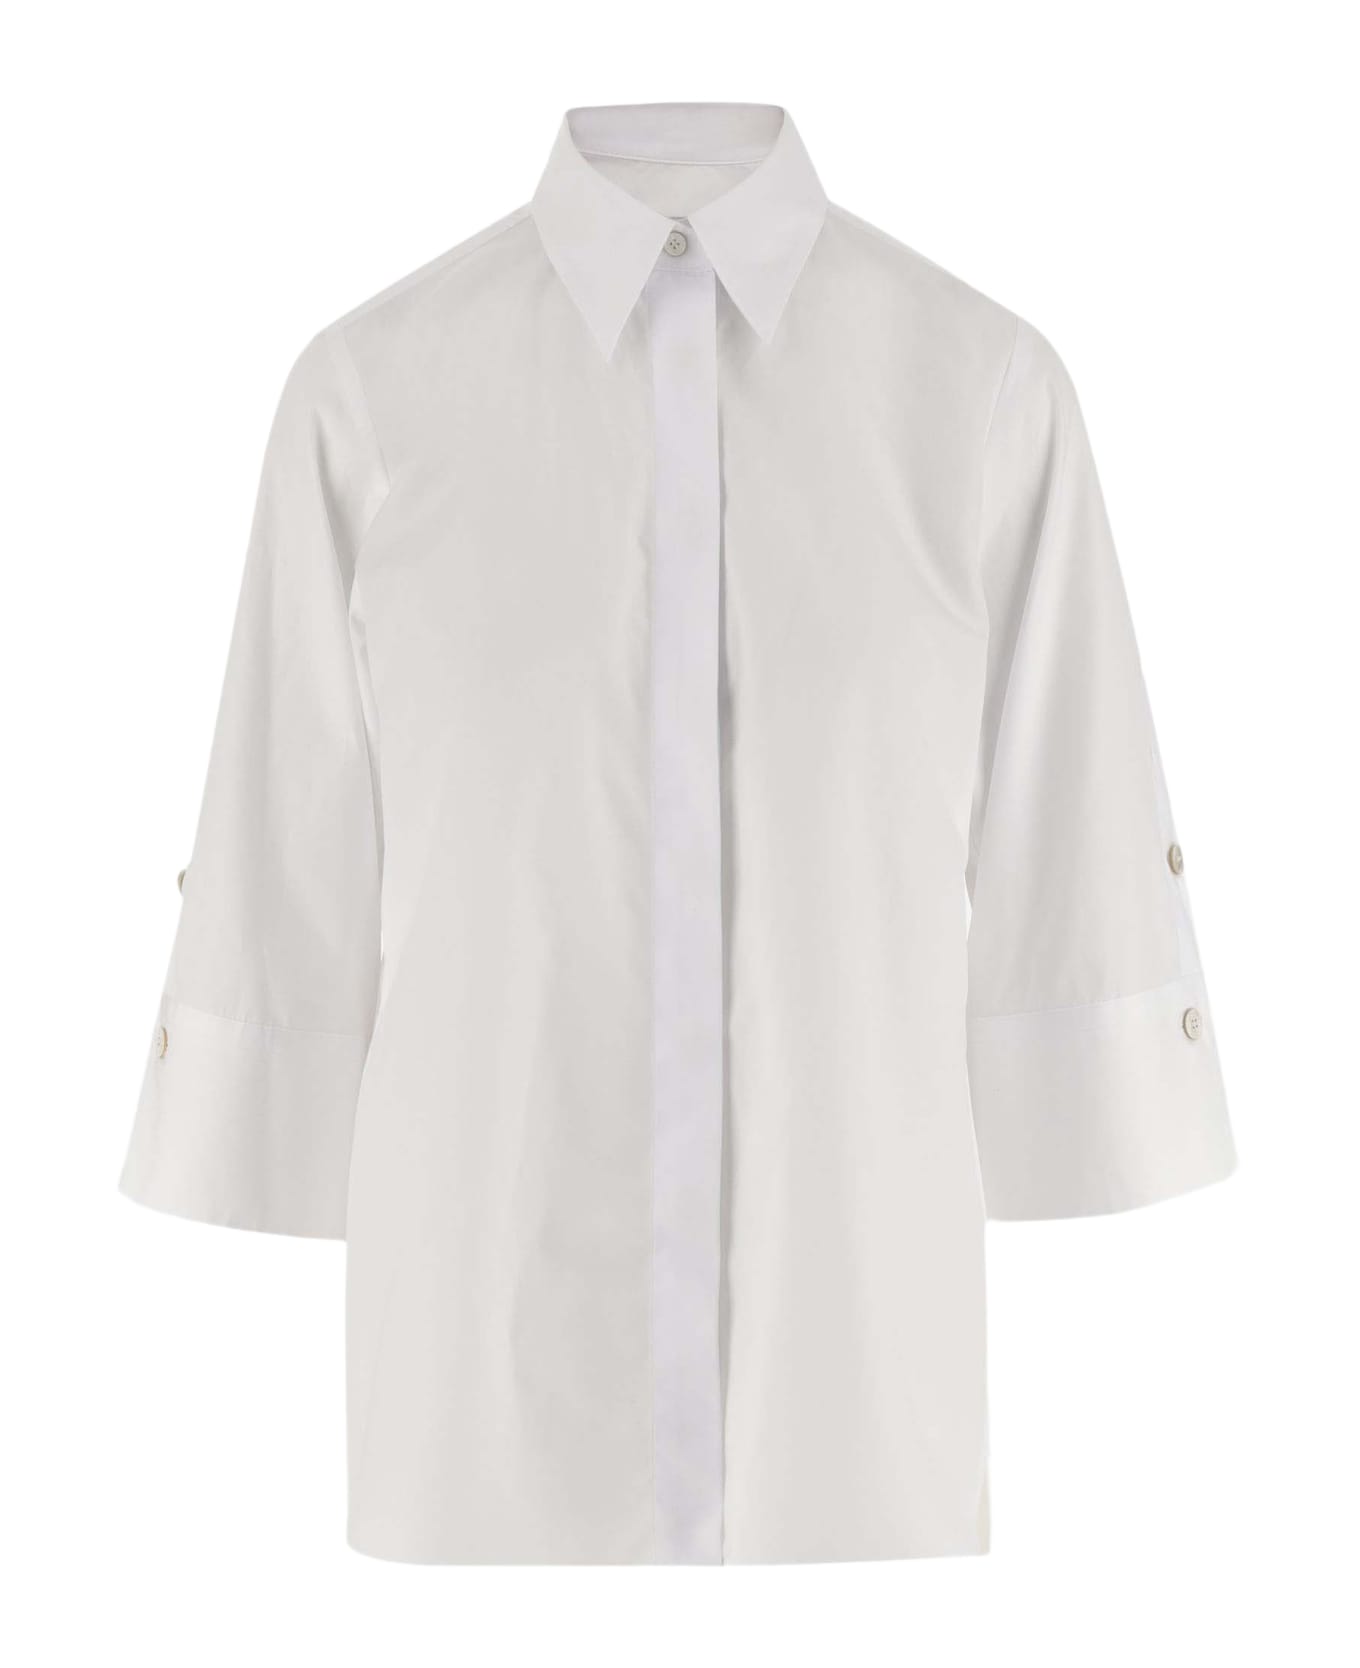 Alberto Biani Cotton Shirt - White